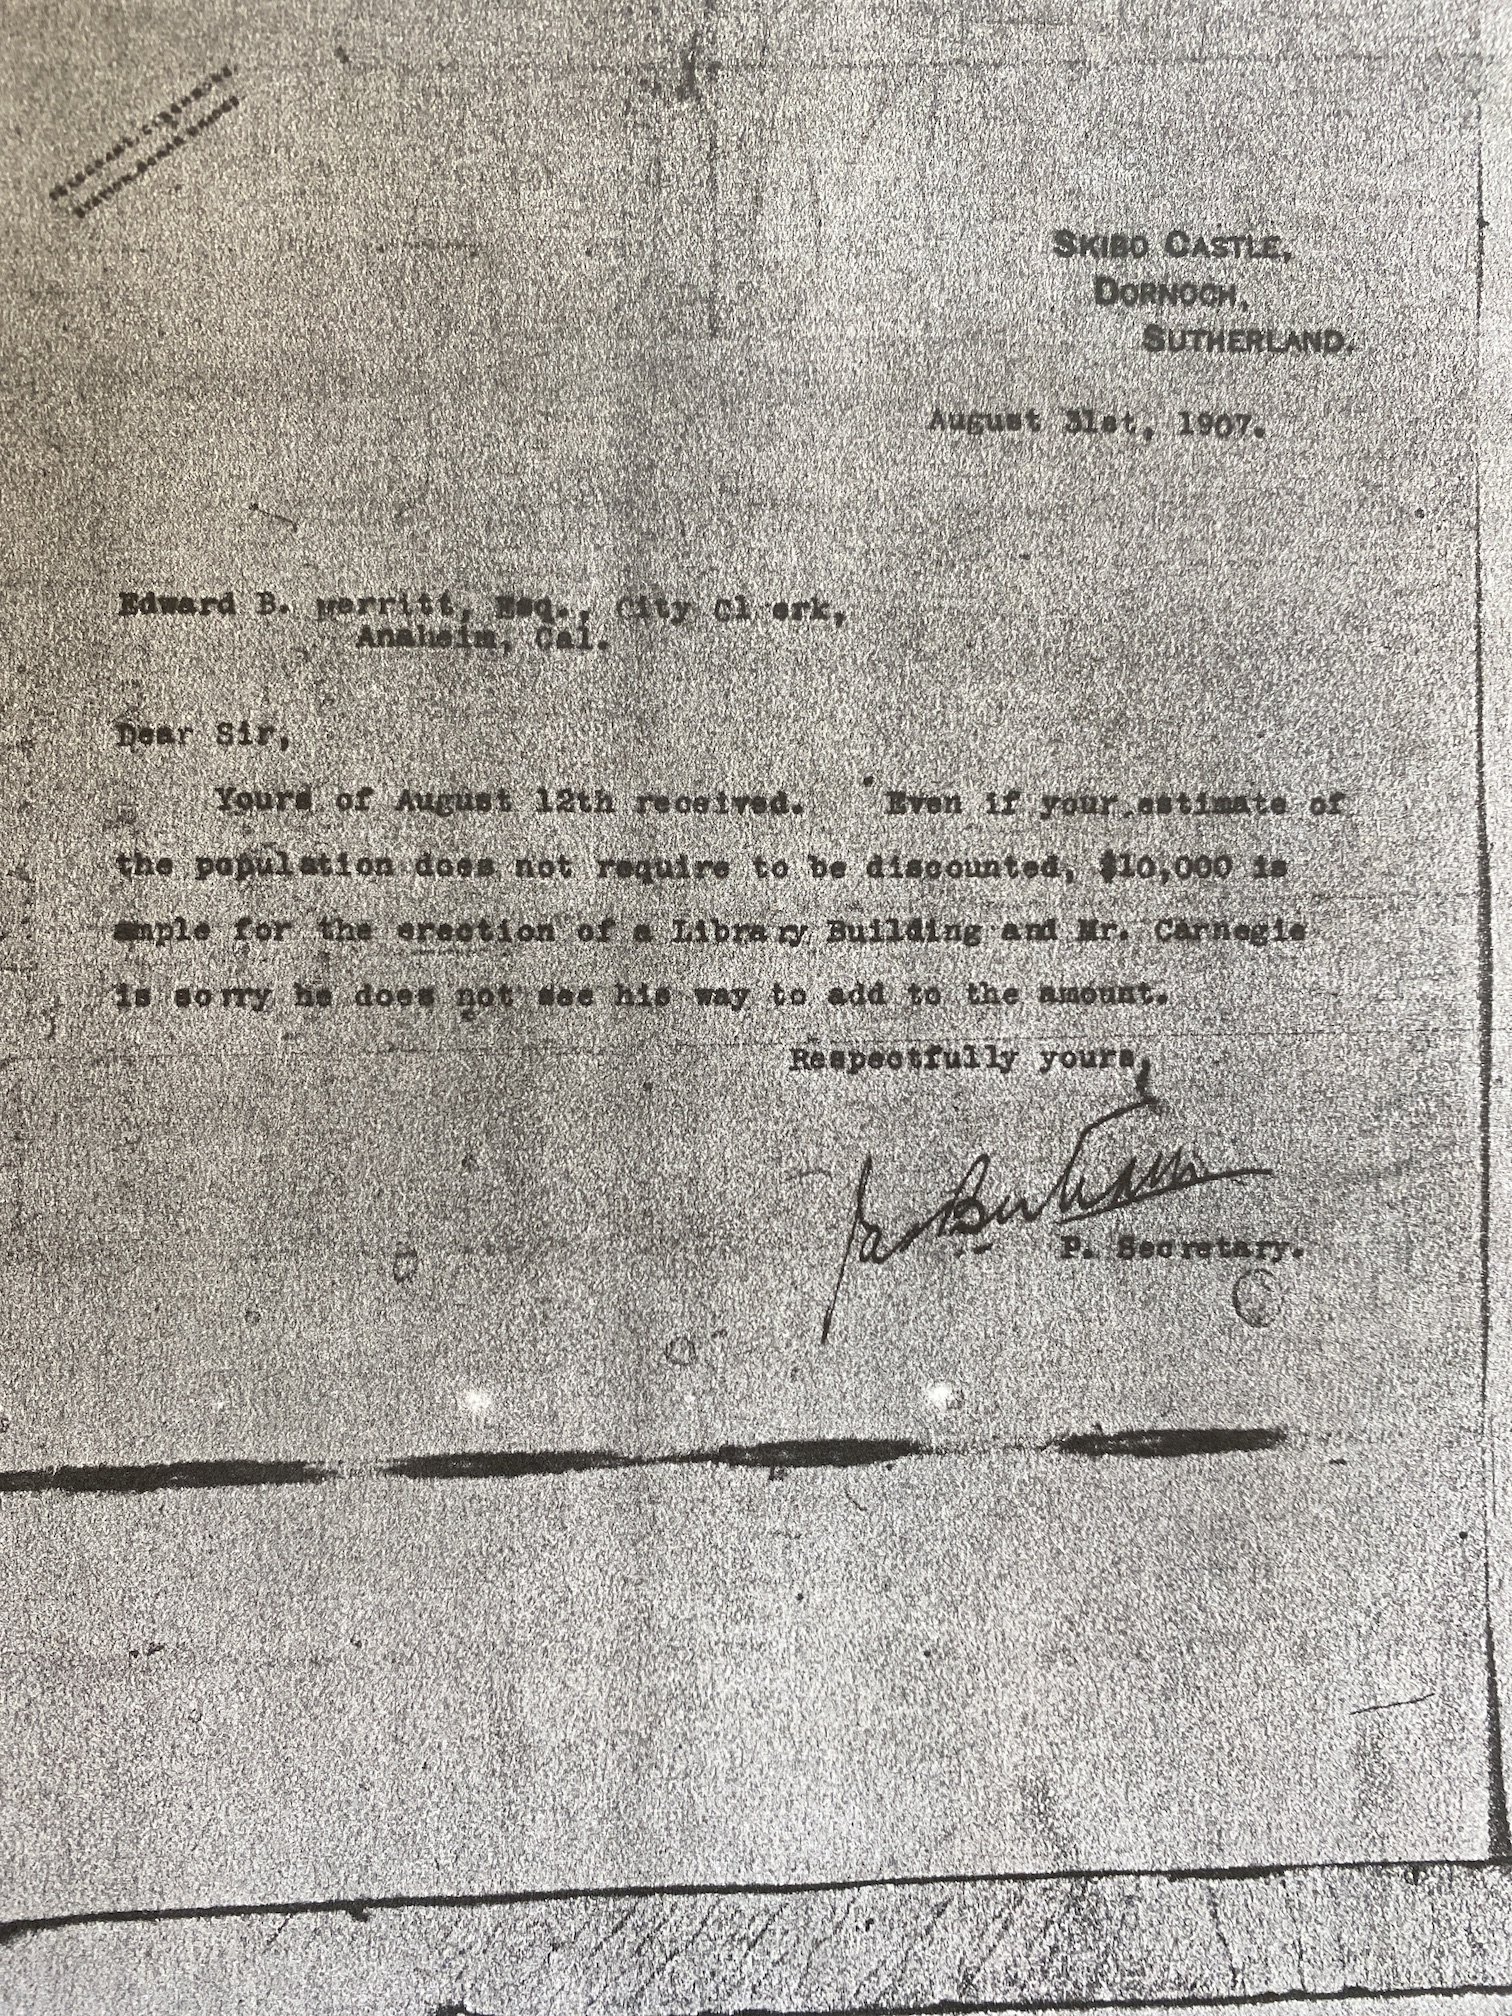 Aug. 1907 letter from Carnegie secretary to Anaheim city clerk.